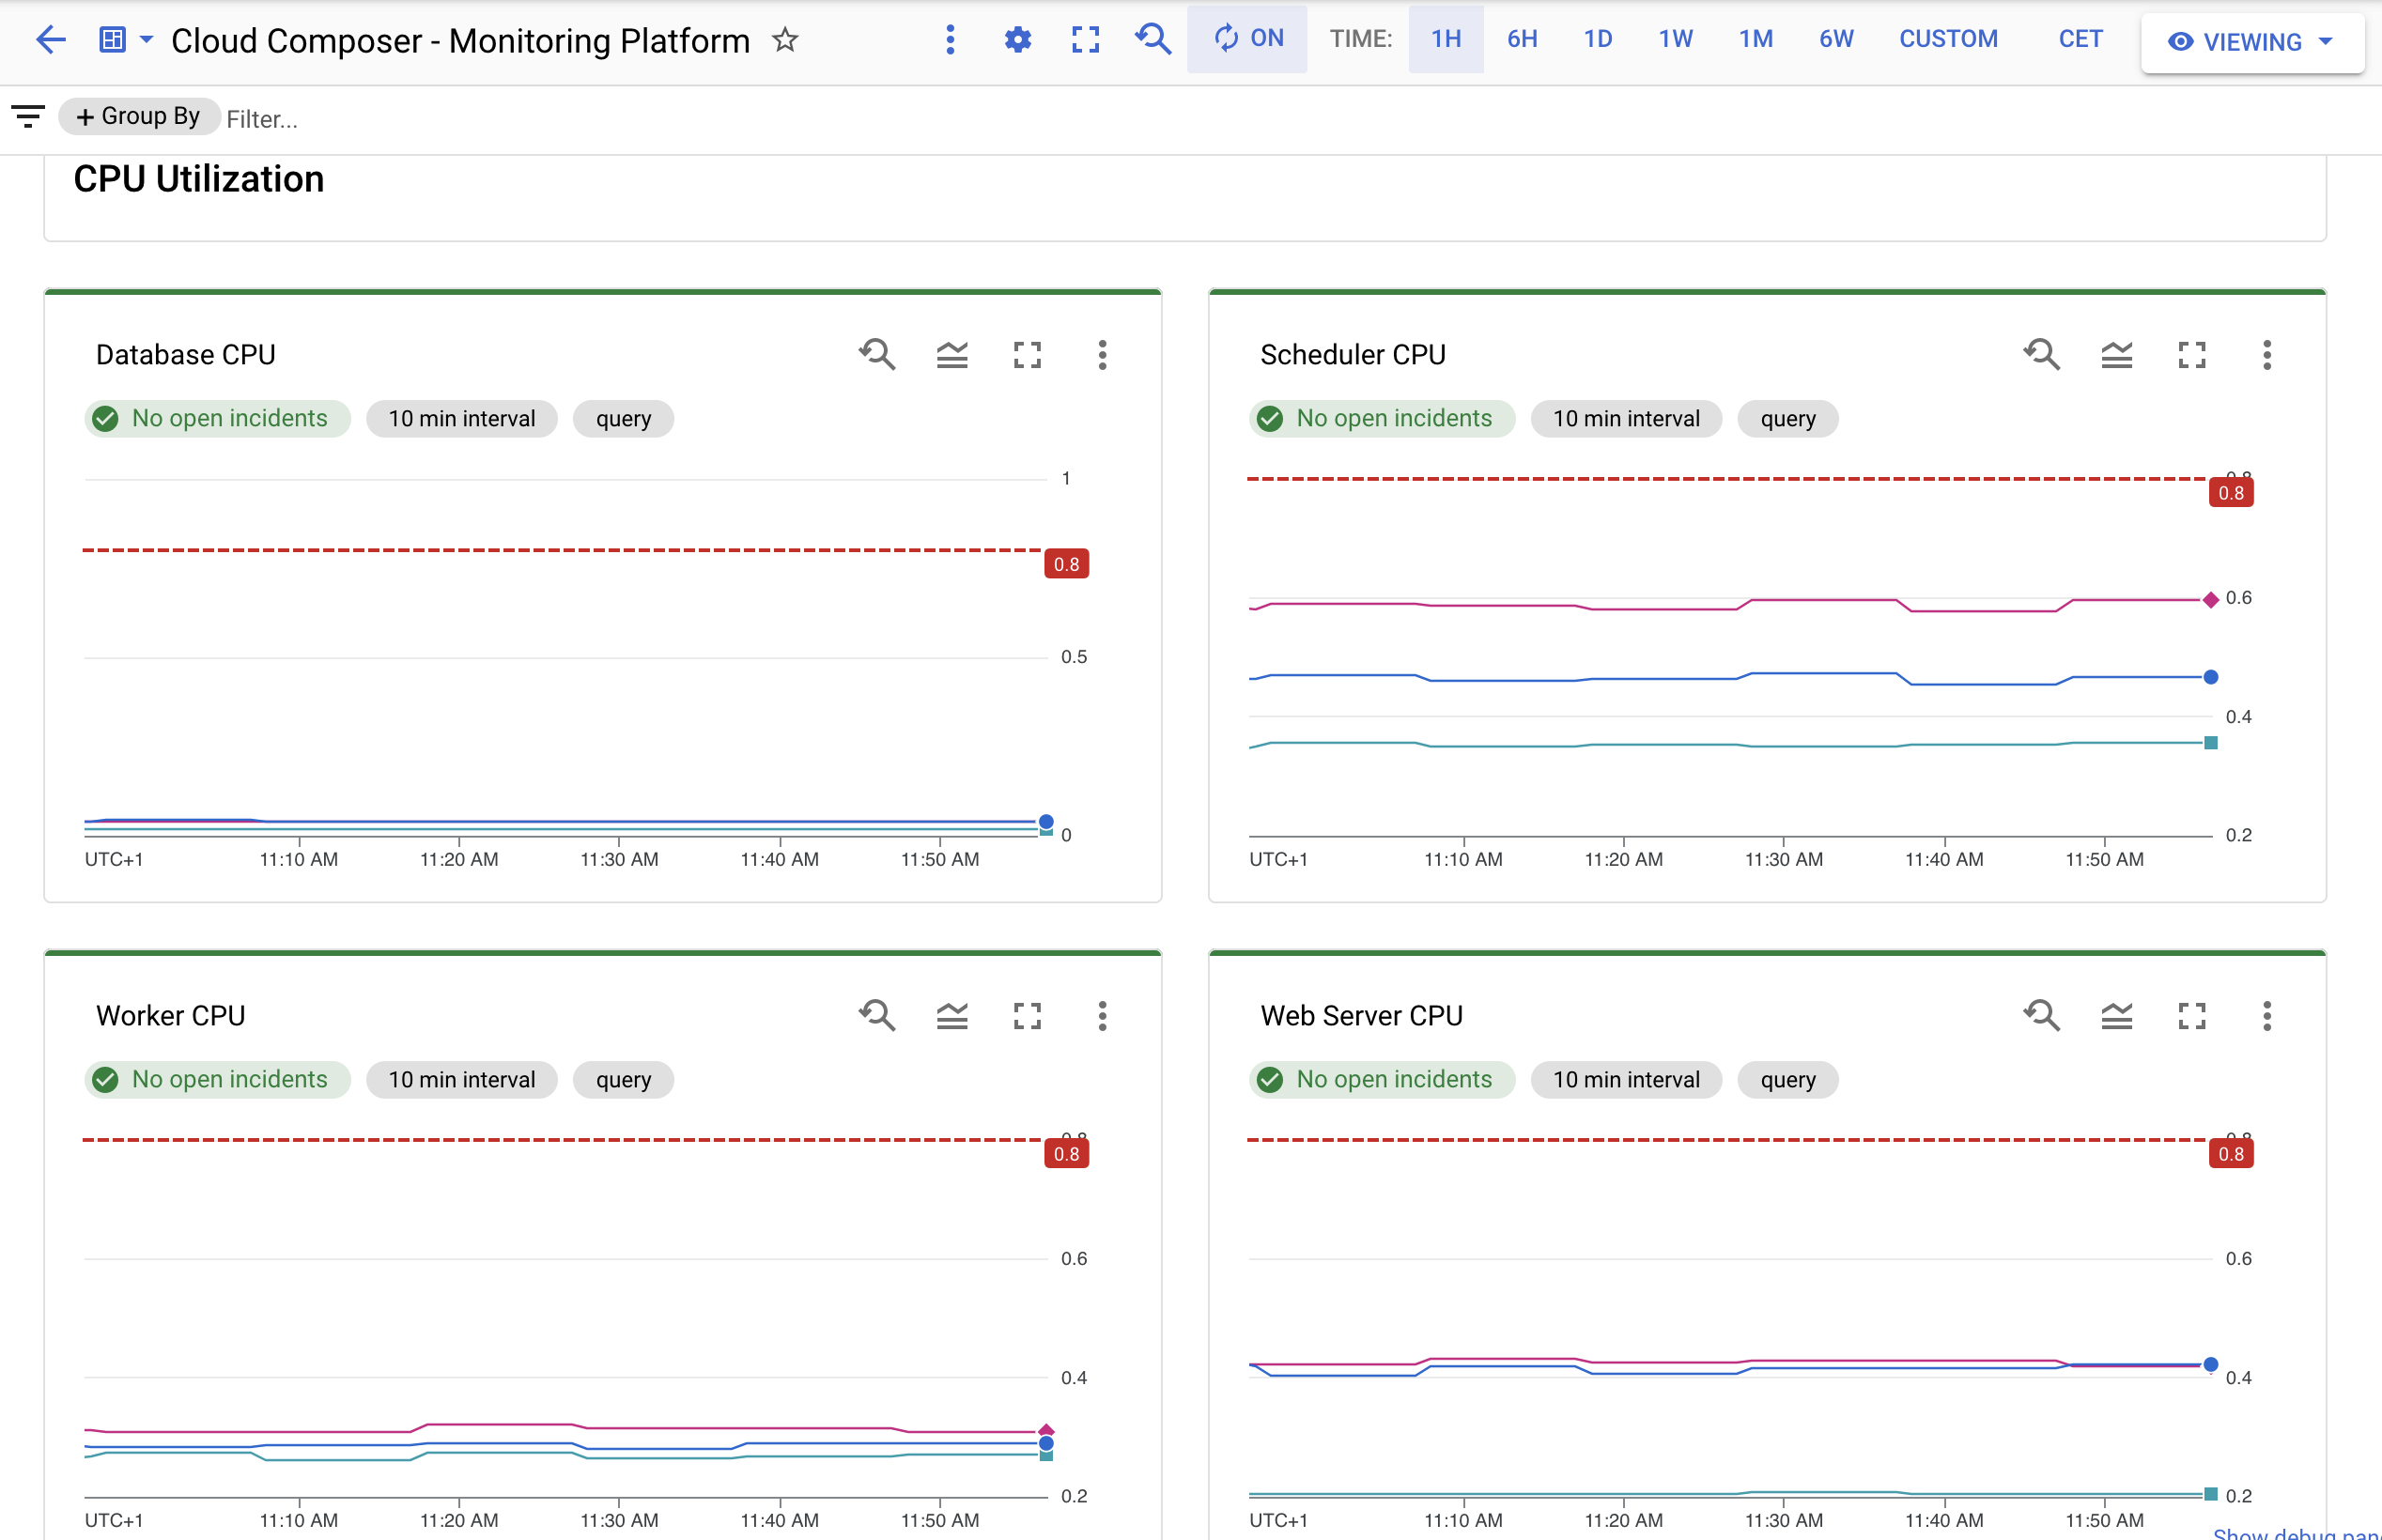 Screenshot of the monitoring dashboard showing Database CPU, Scheduler CPU, Worker CPU, and Webserver CPU